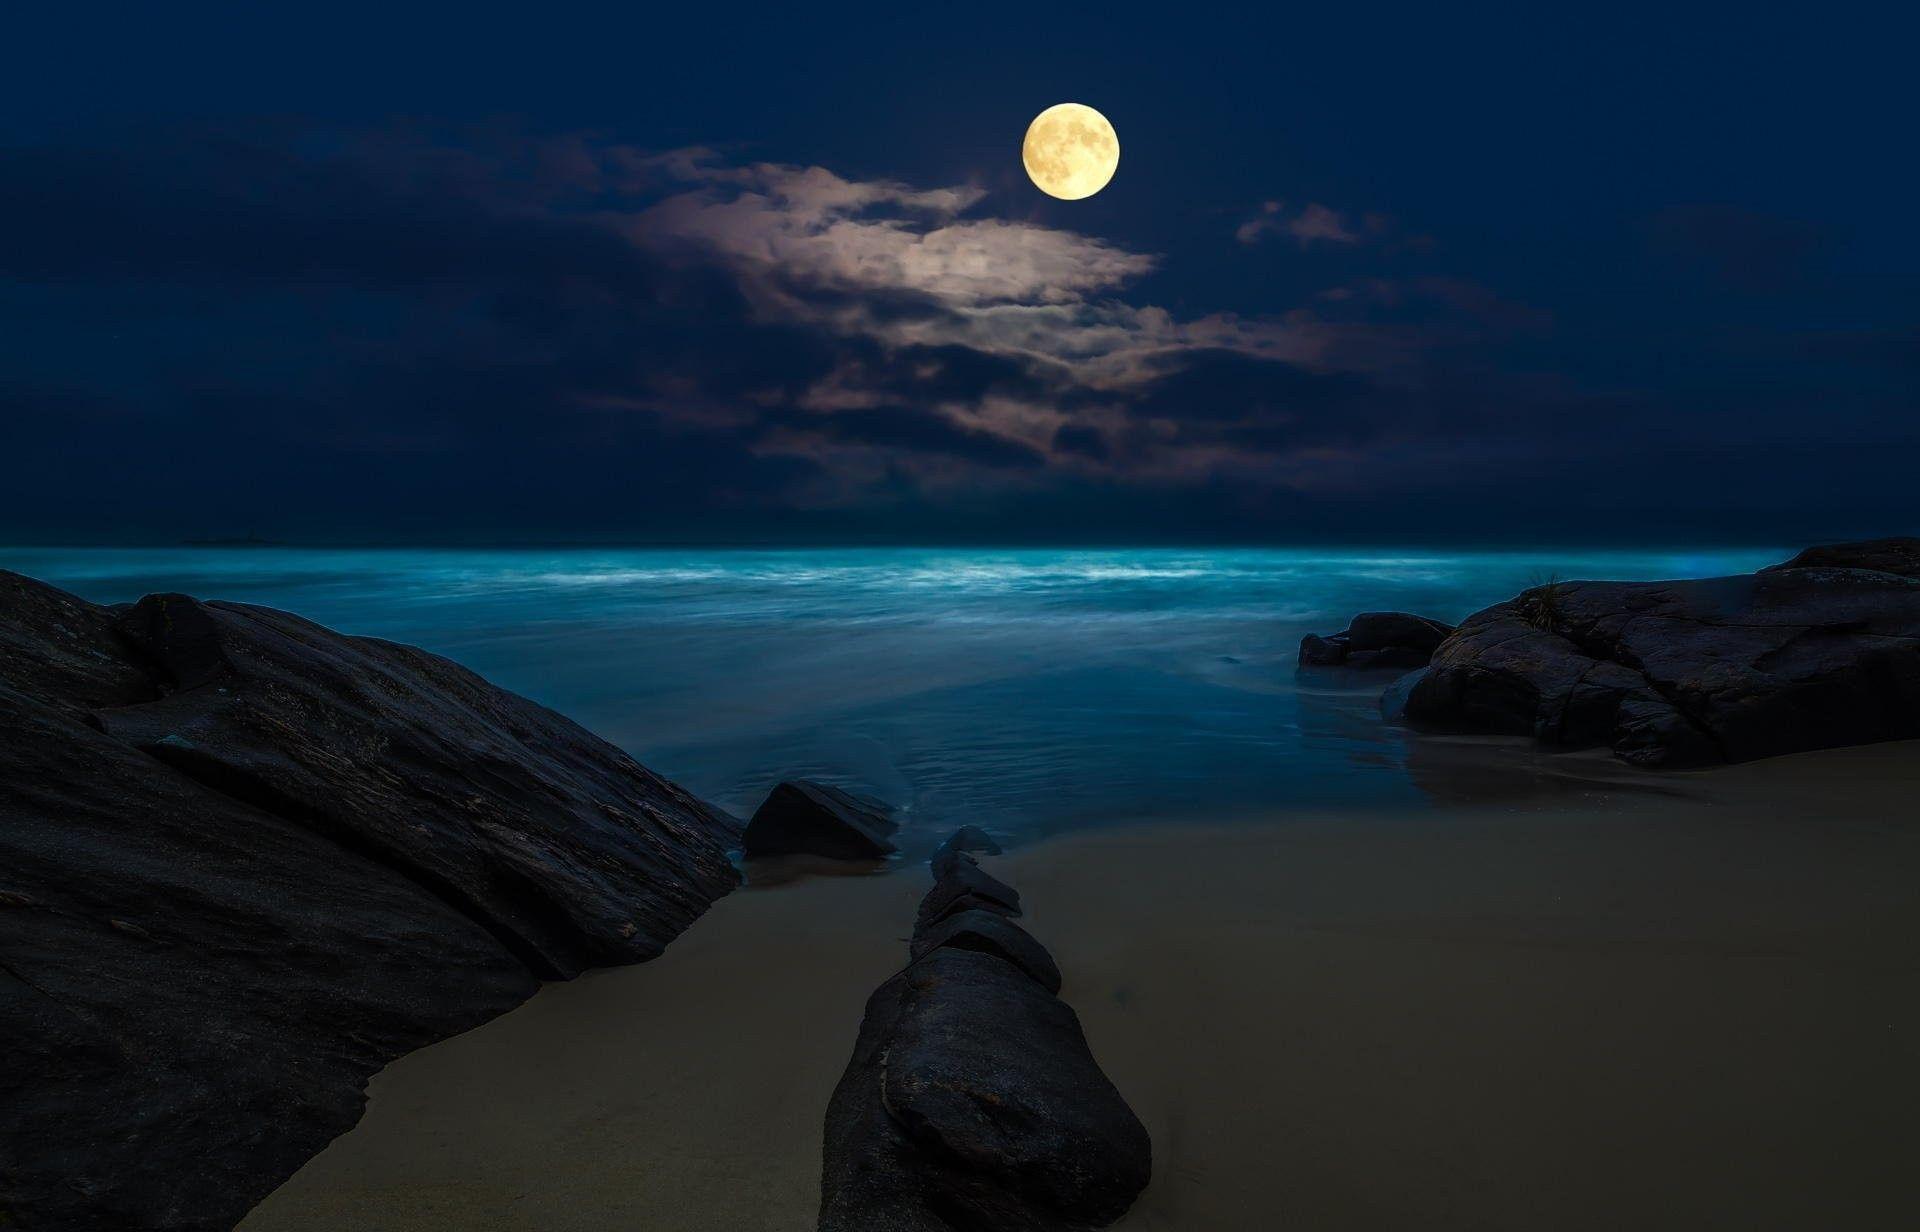 Beach Night Sea Moon Full Ocean Wallpaper Of Nature For Desktop